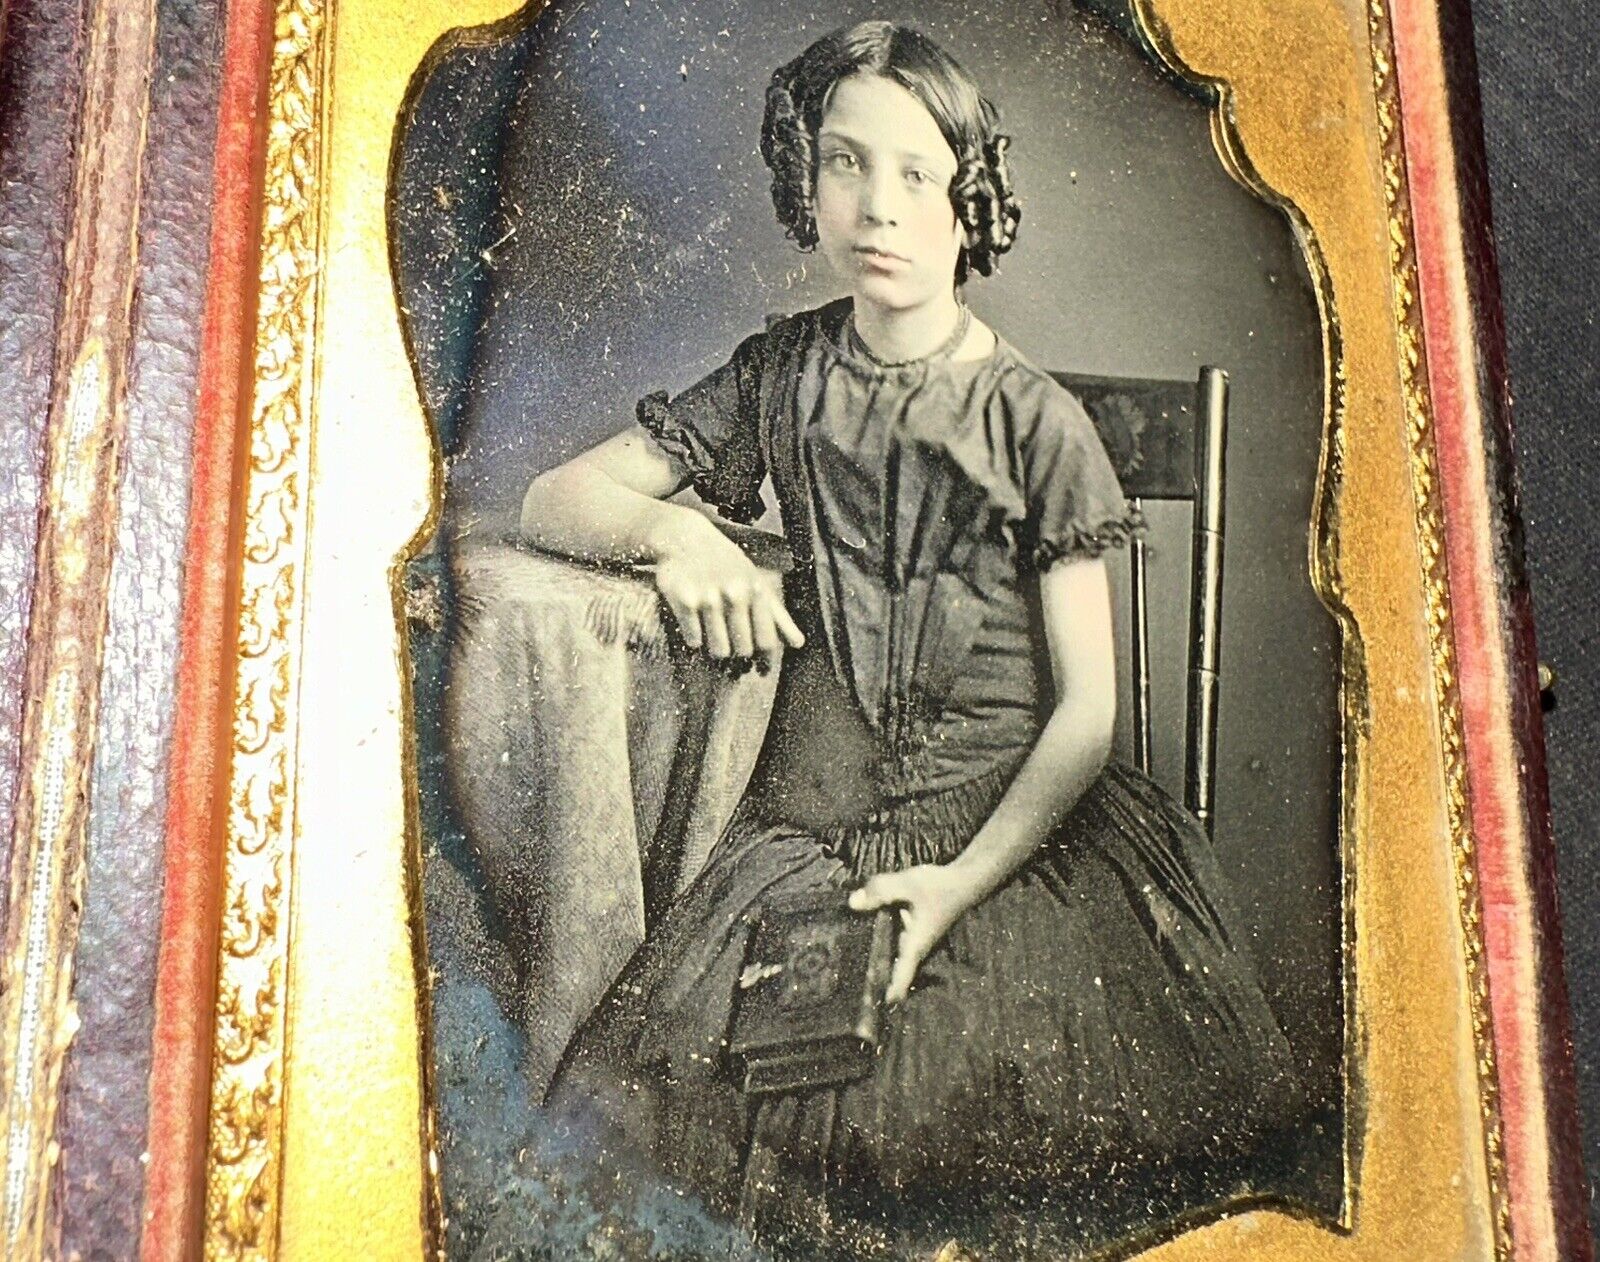 Little Girl Holding Book - Mourning Photo? 1/6 Daguerreotype Unusual Mat